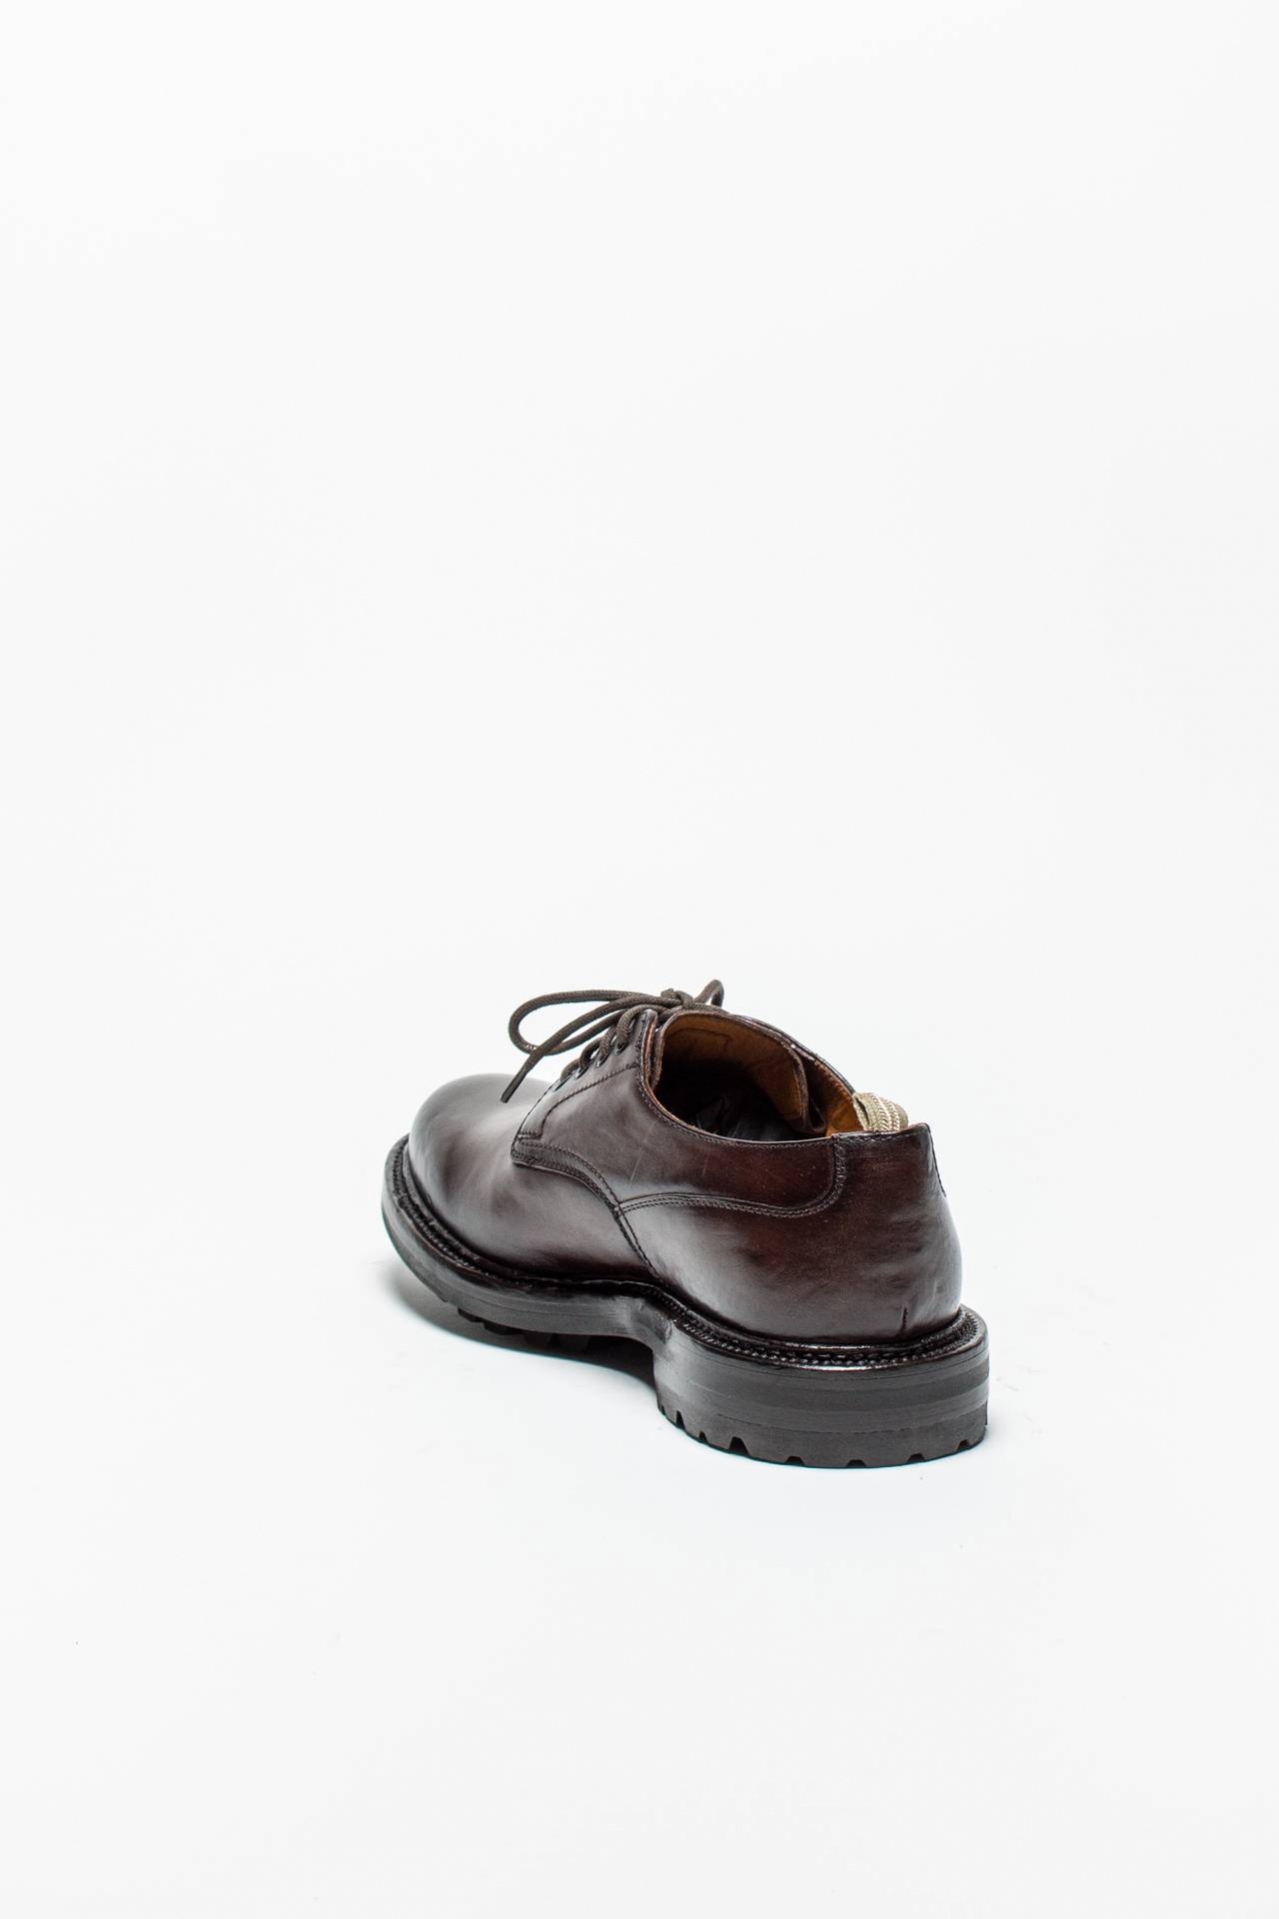 BRISTOL/001 leather shoes